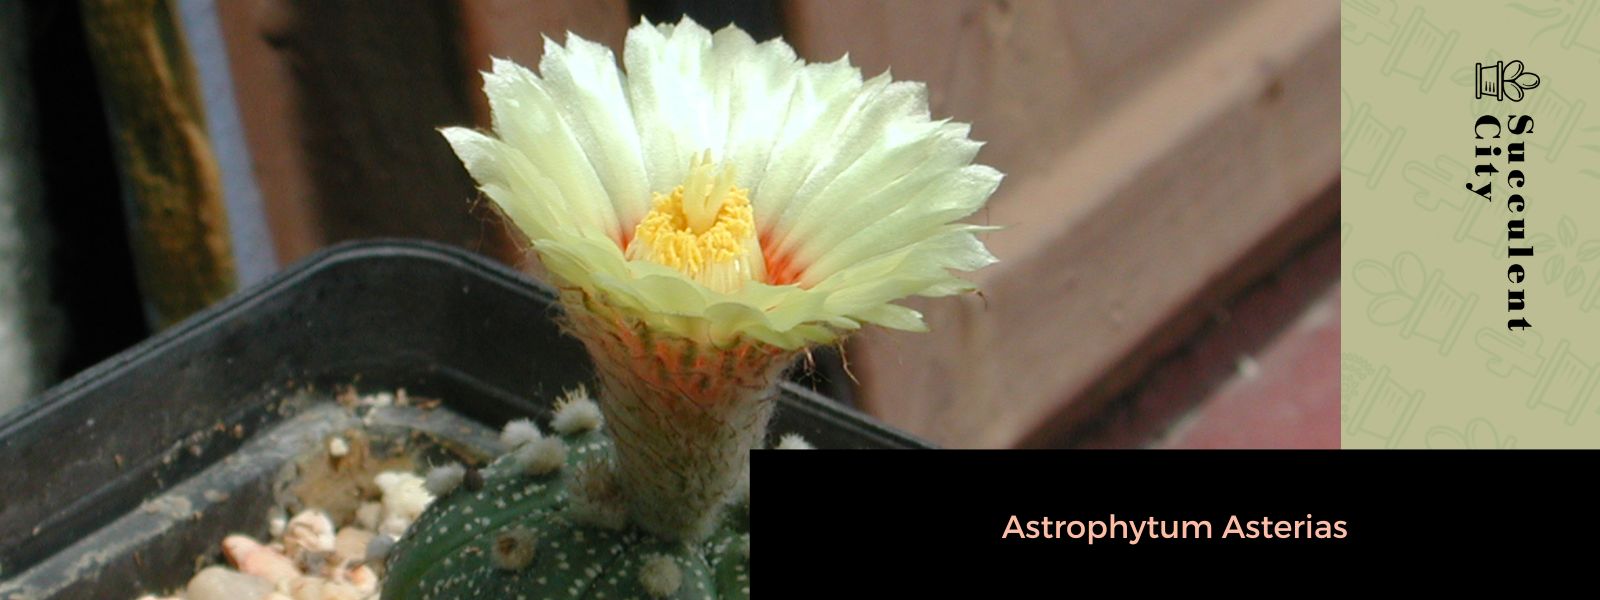 The star cactus astrophytum asterias